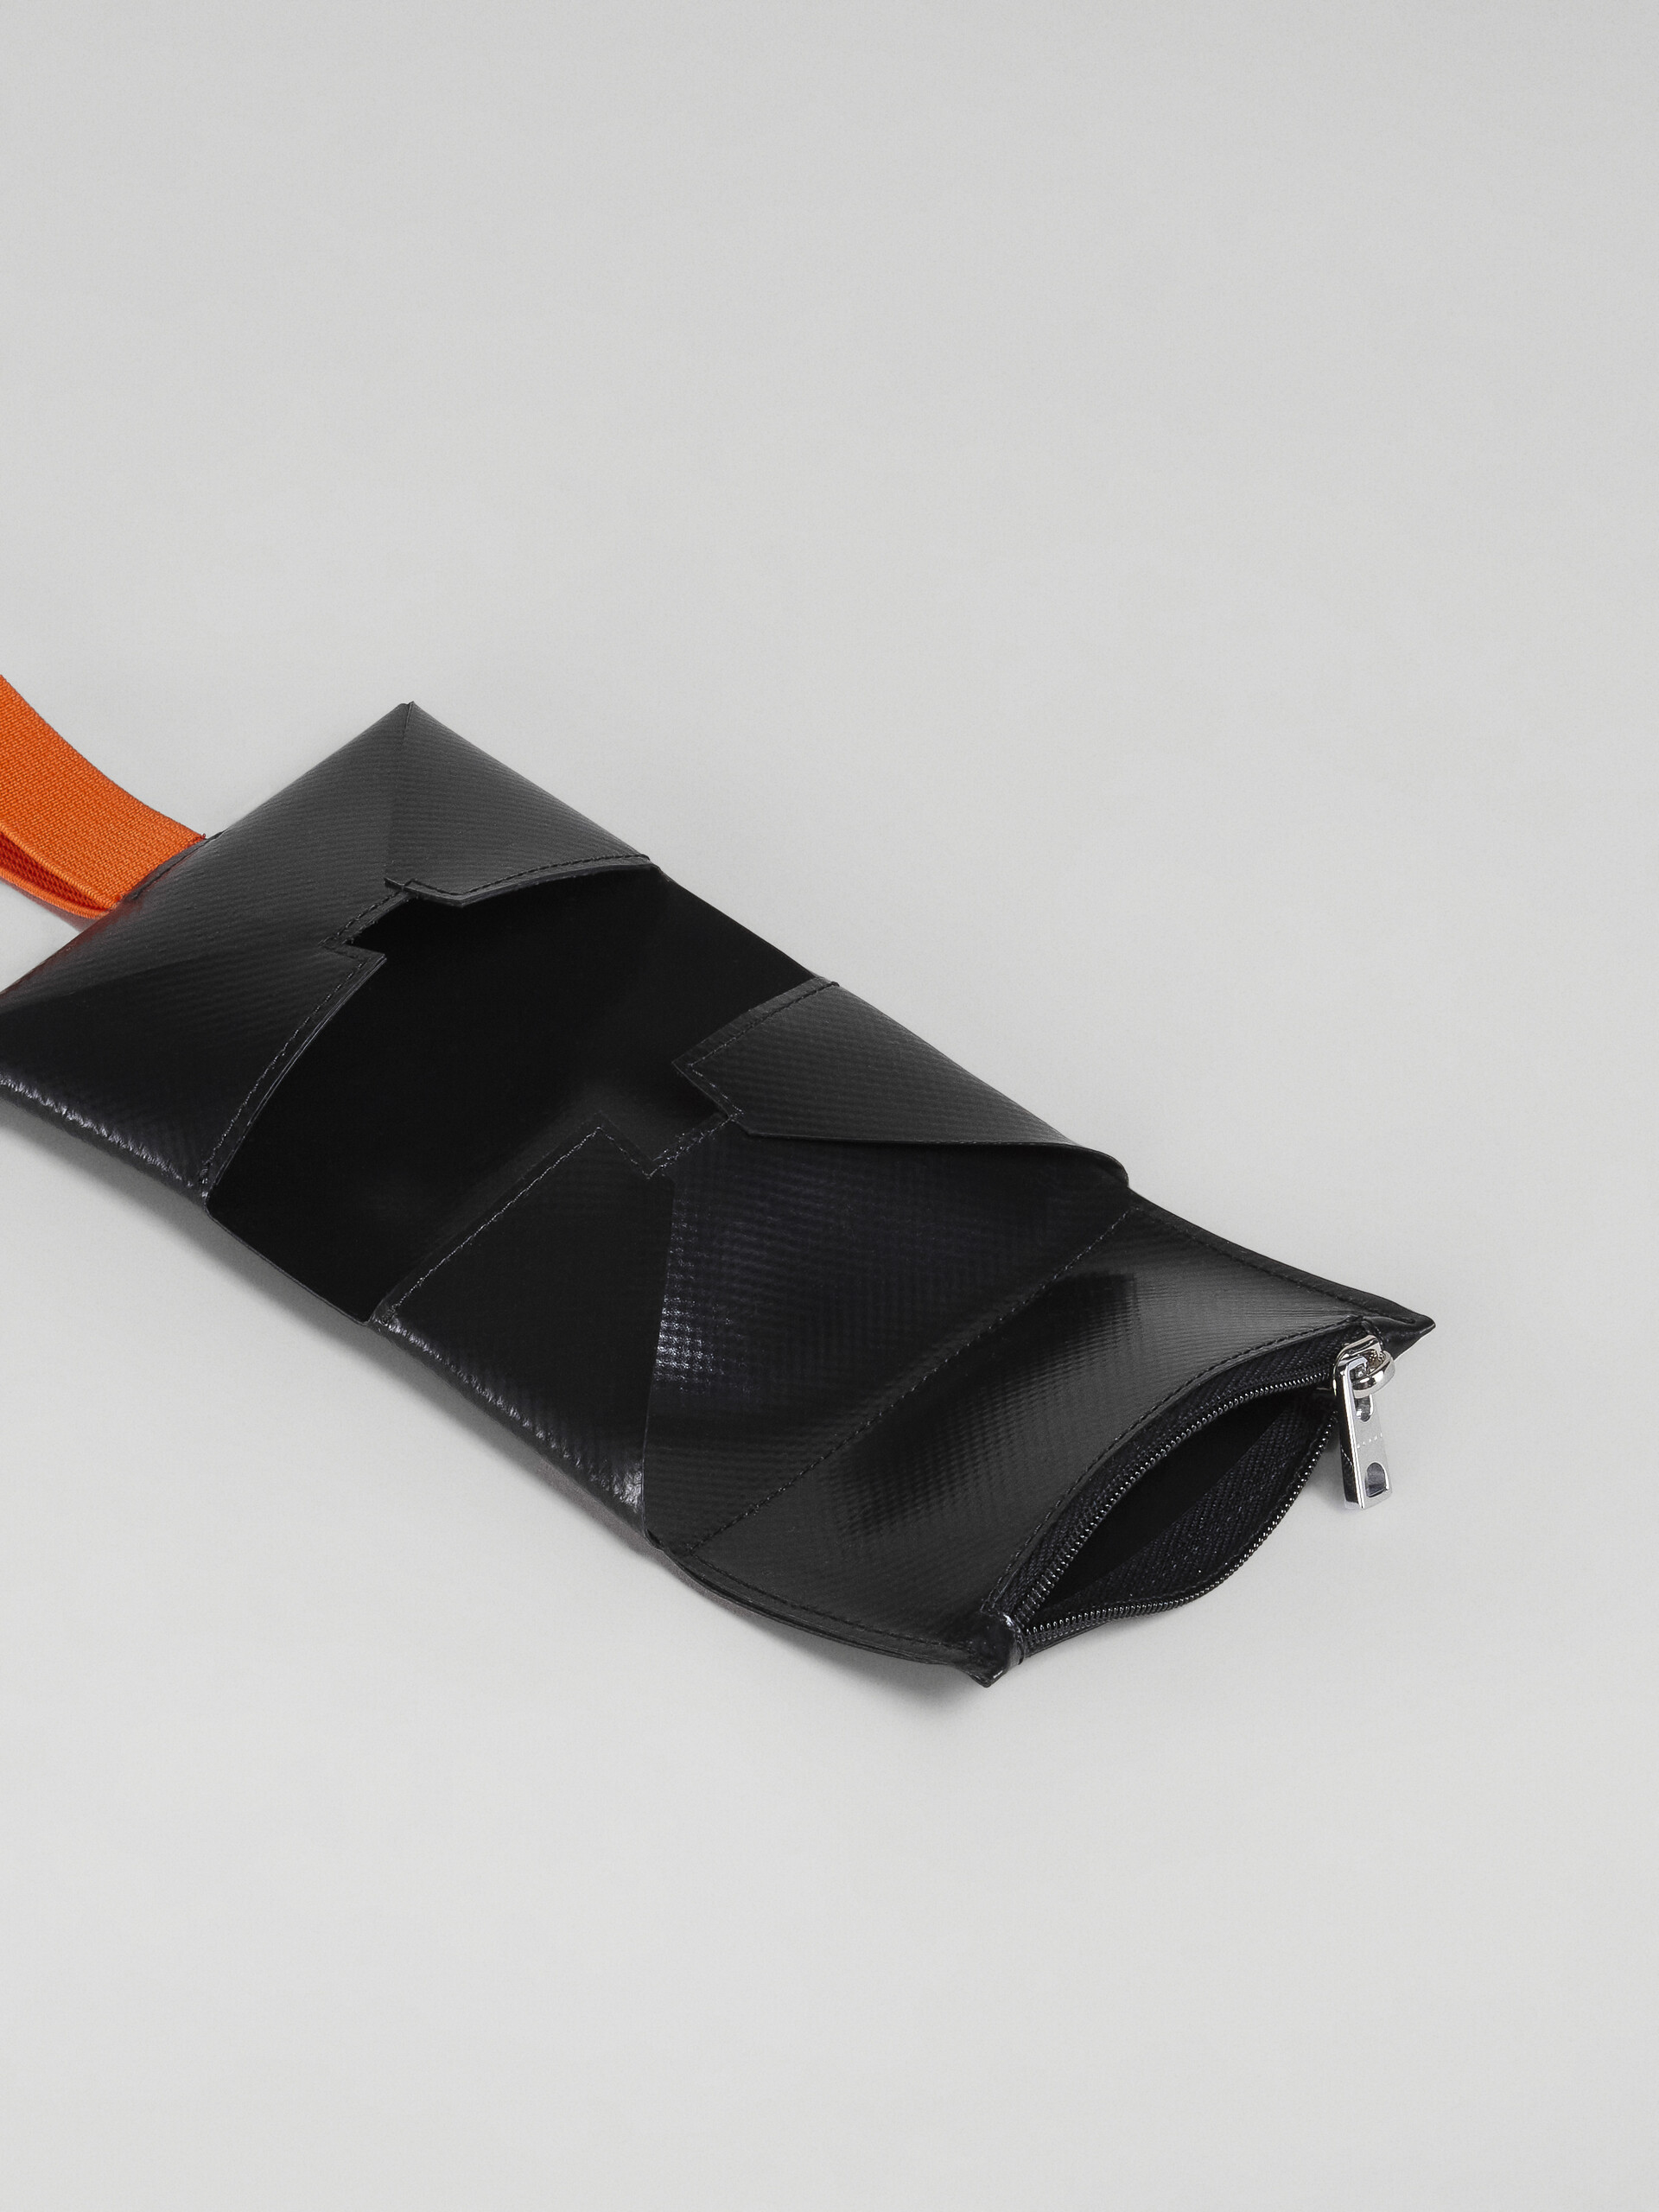 Black and orange PVC tri-fold wallet - Wallets - Image 2